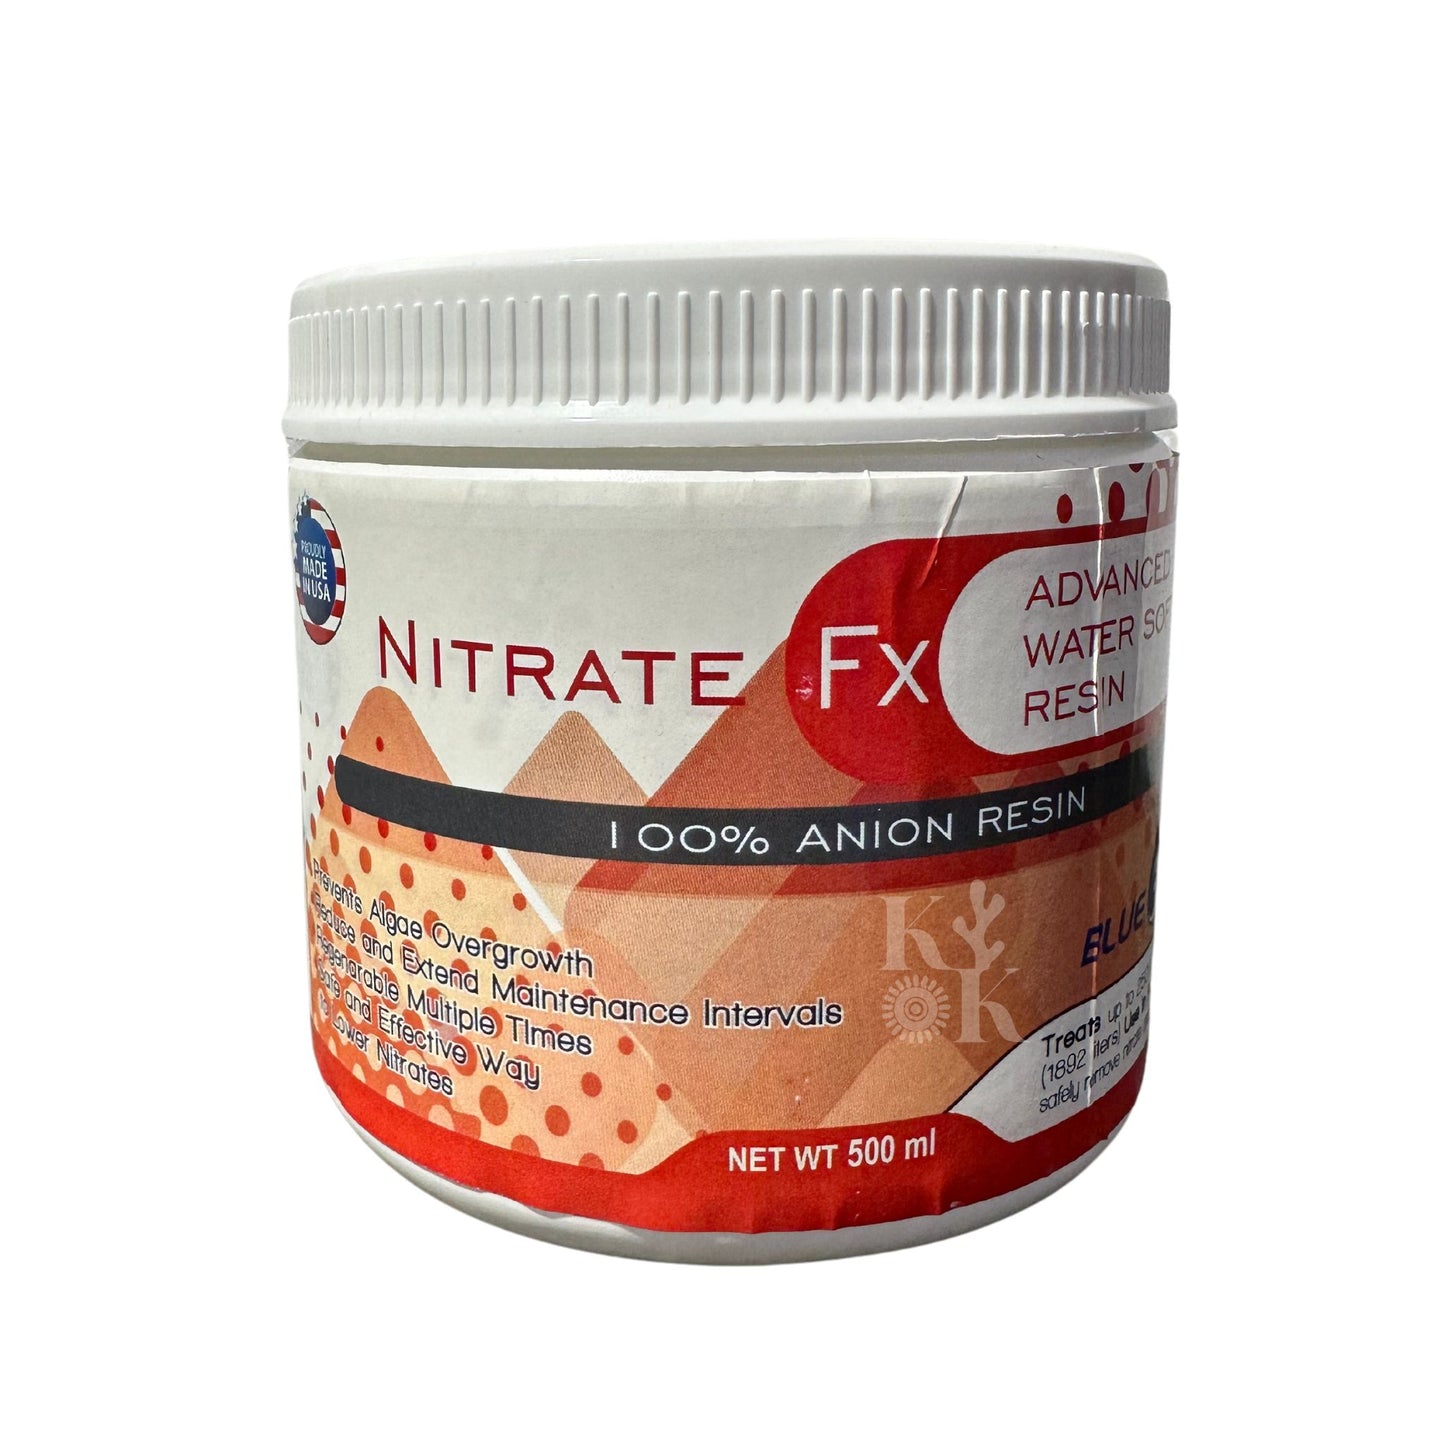 Nitrate Fx - Blue Life USA